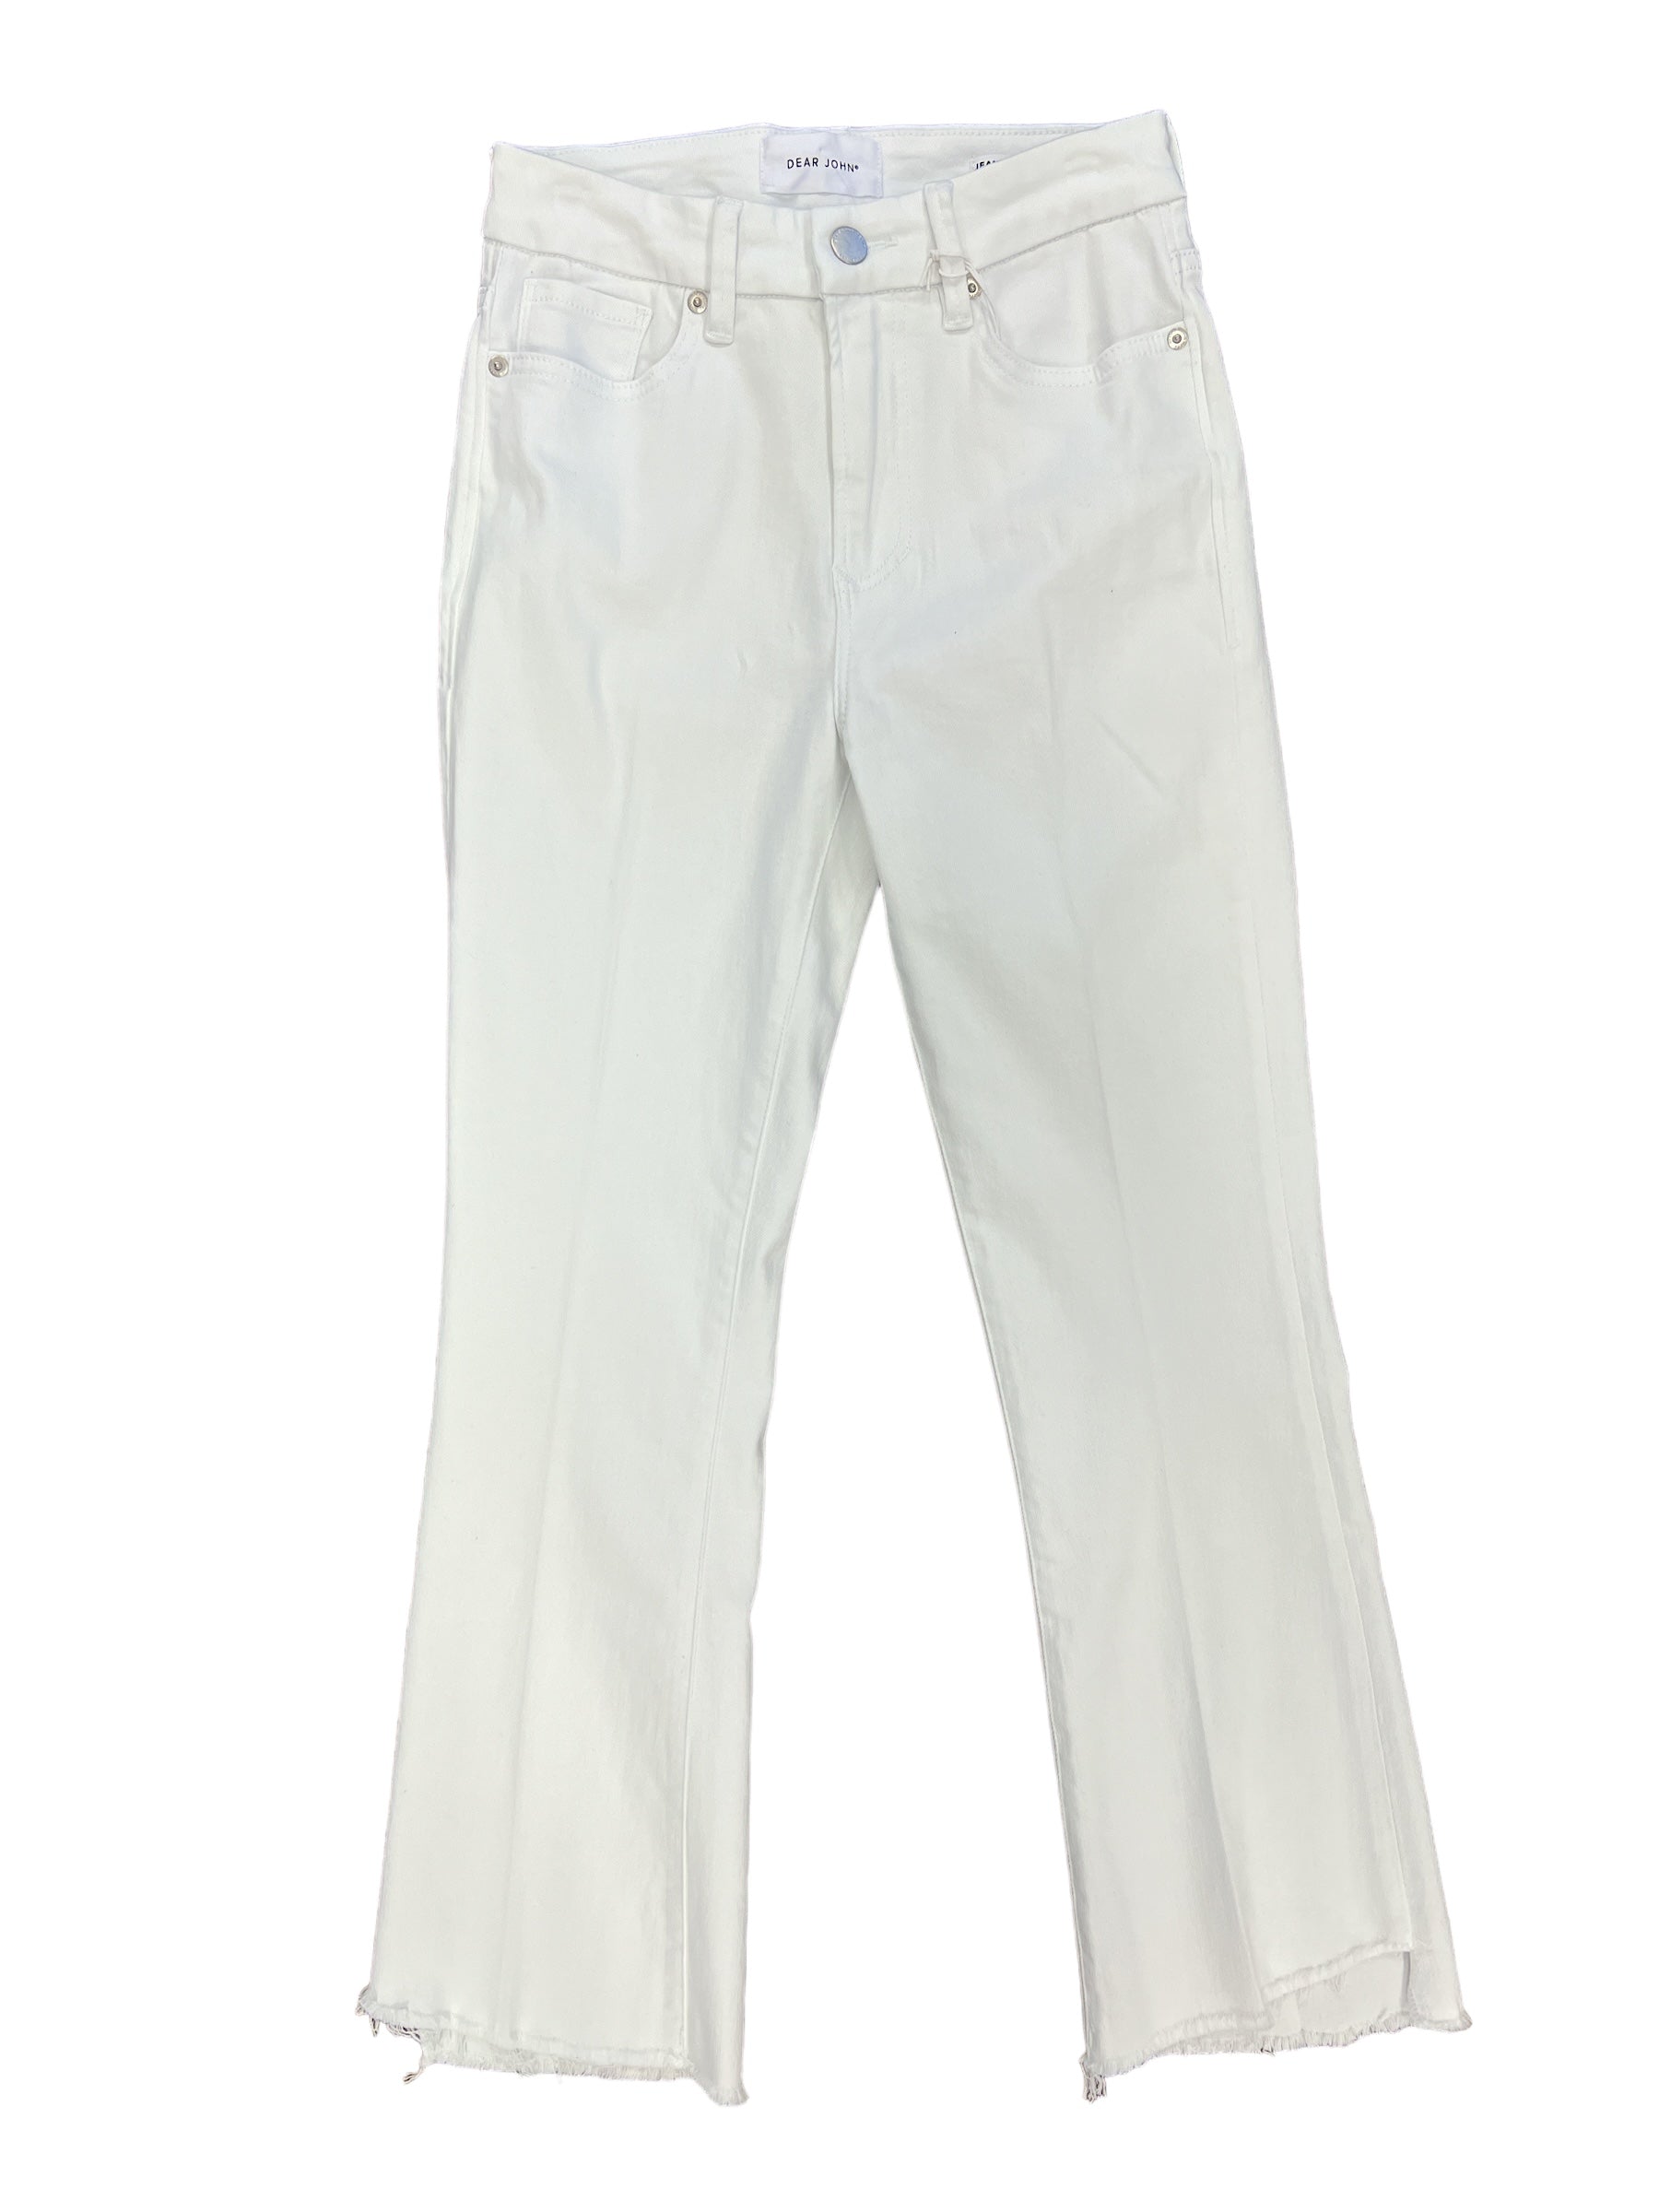 Jeanne White Cropped Flare Jeans-230 Pants-Dear John-Simply Stylish Boutique | Women’s & Kid’s Fashion | Paducah, KY